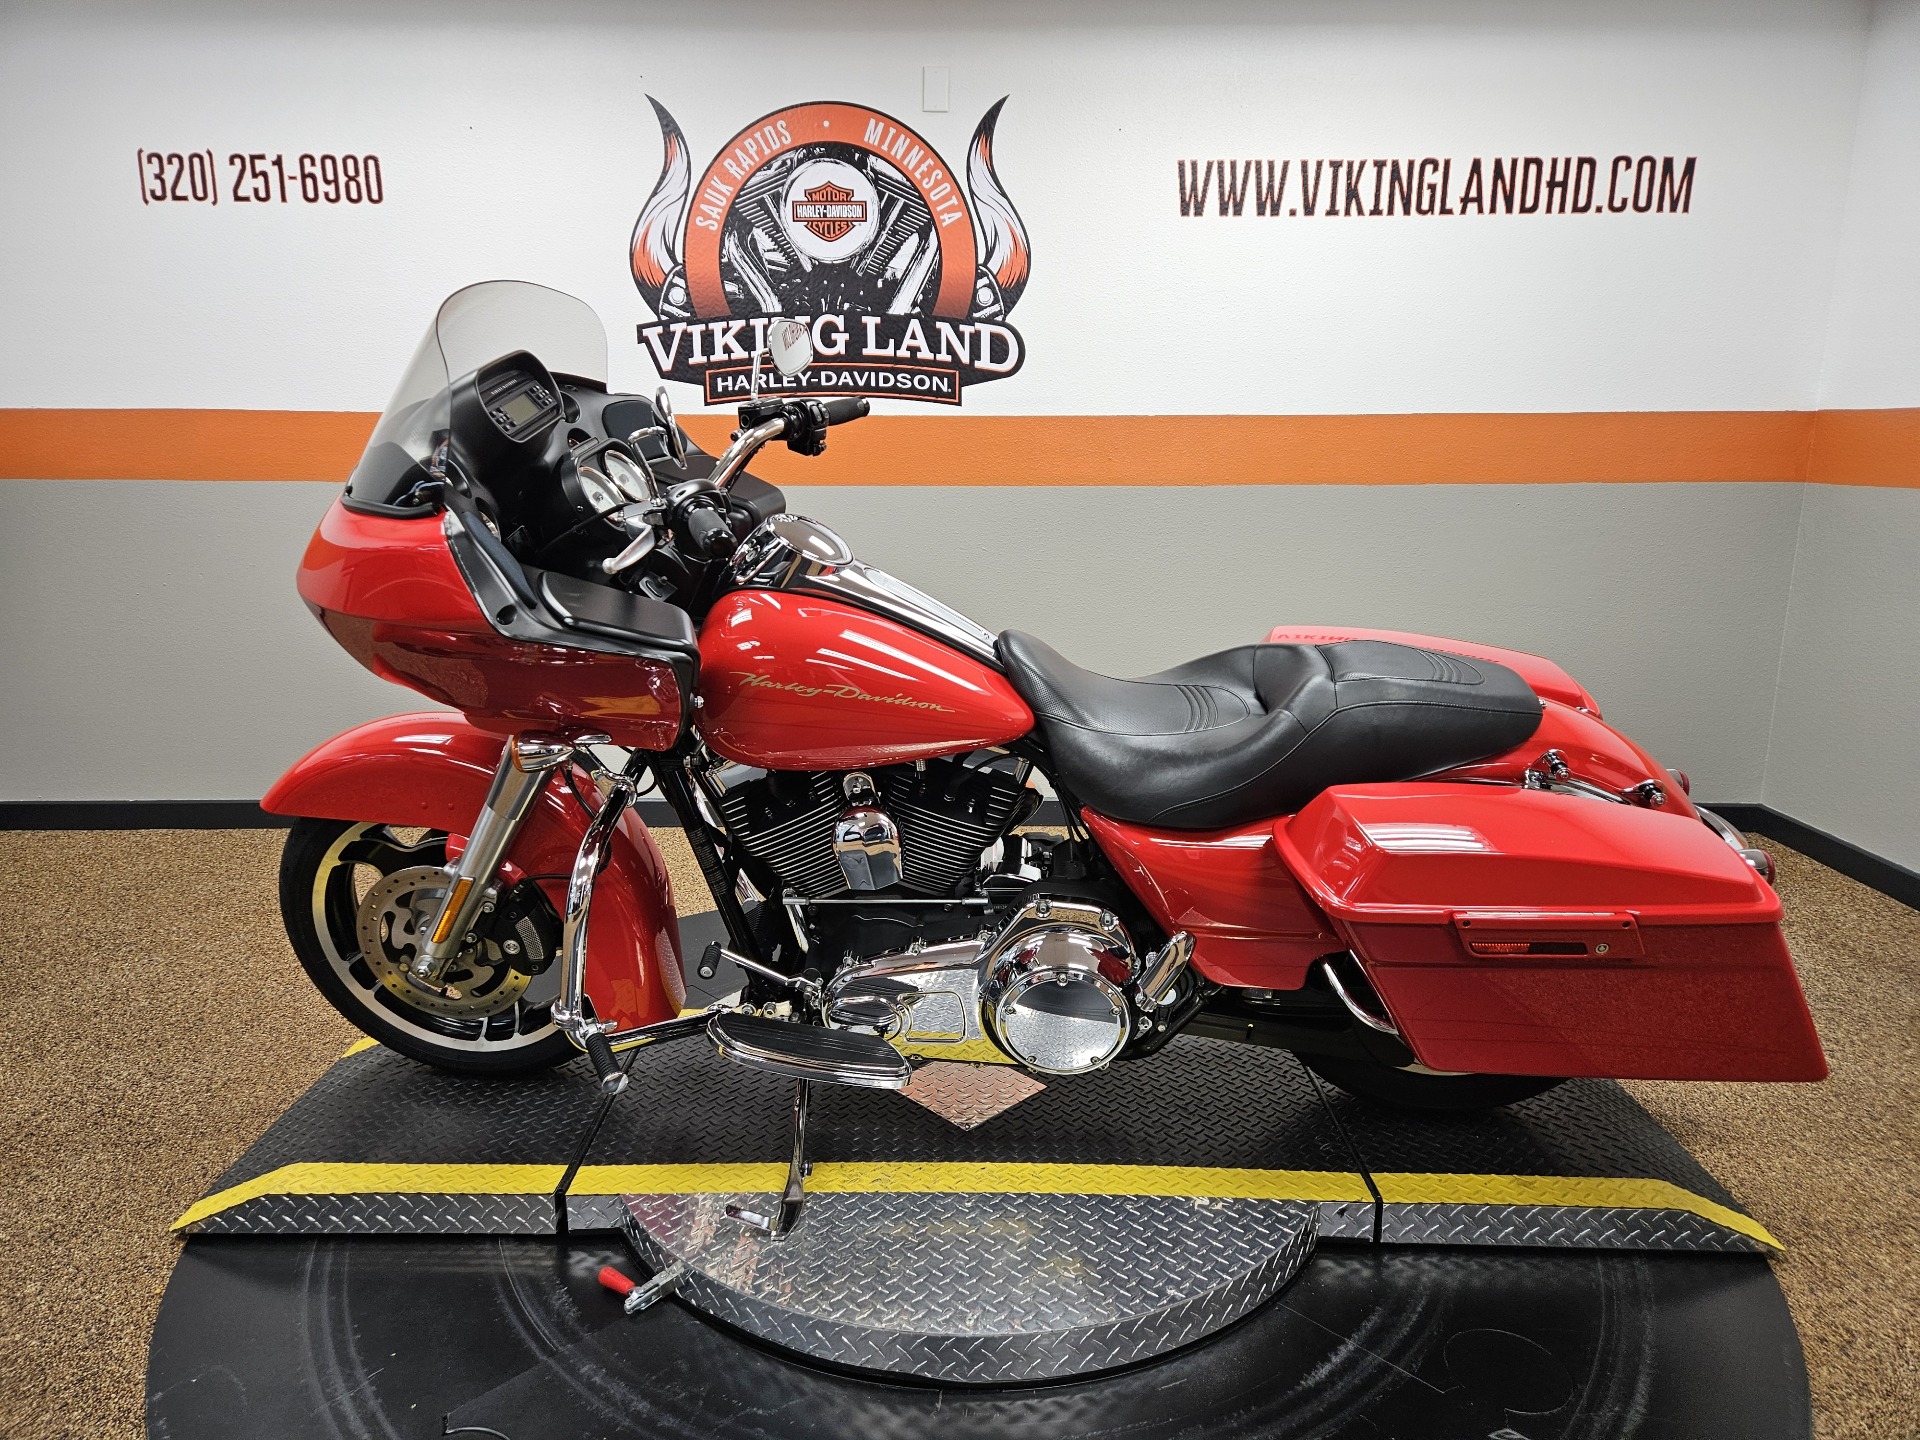 2010 Harley-Davidson Road Glide® Custom in Sauk Rapids, Minnesota - Photo 10